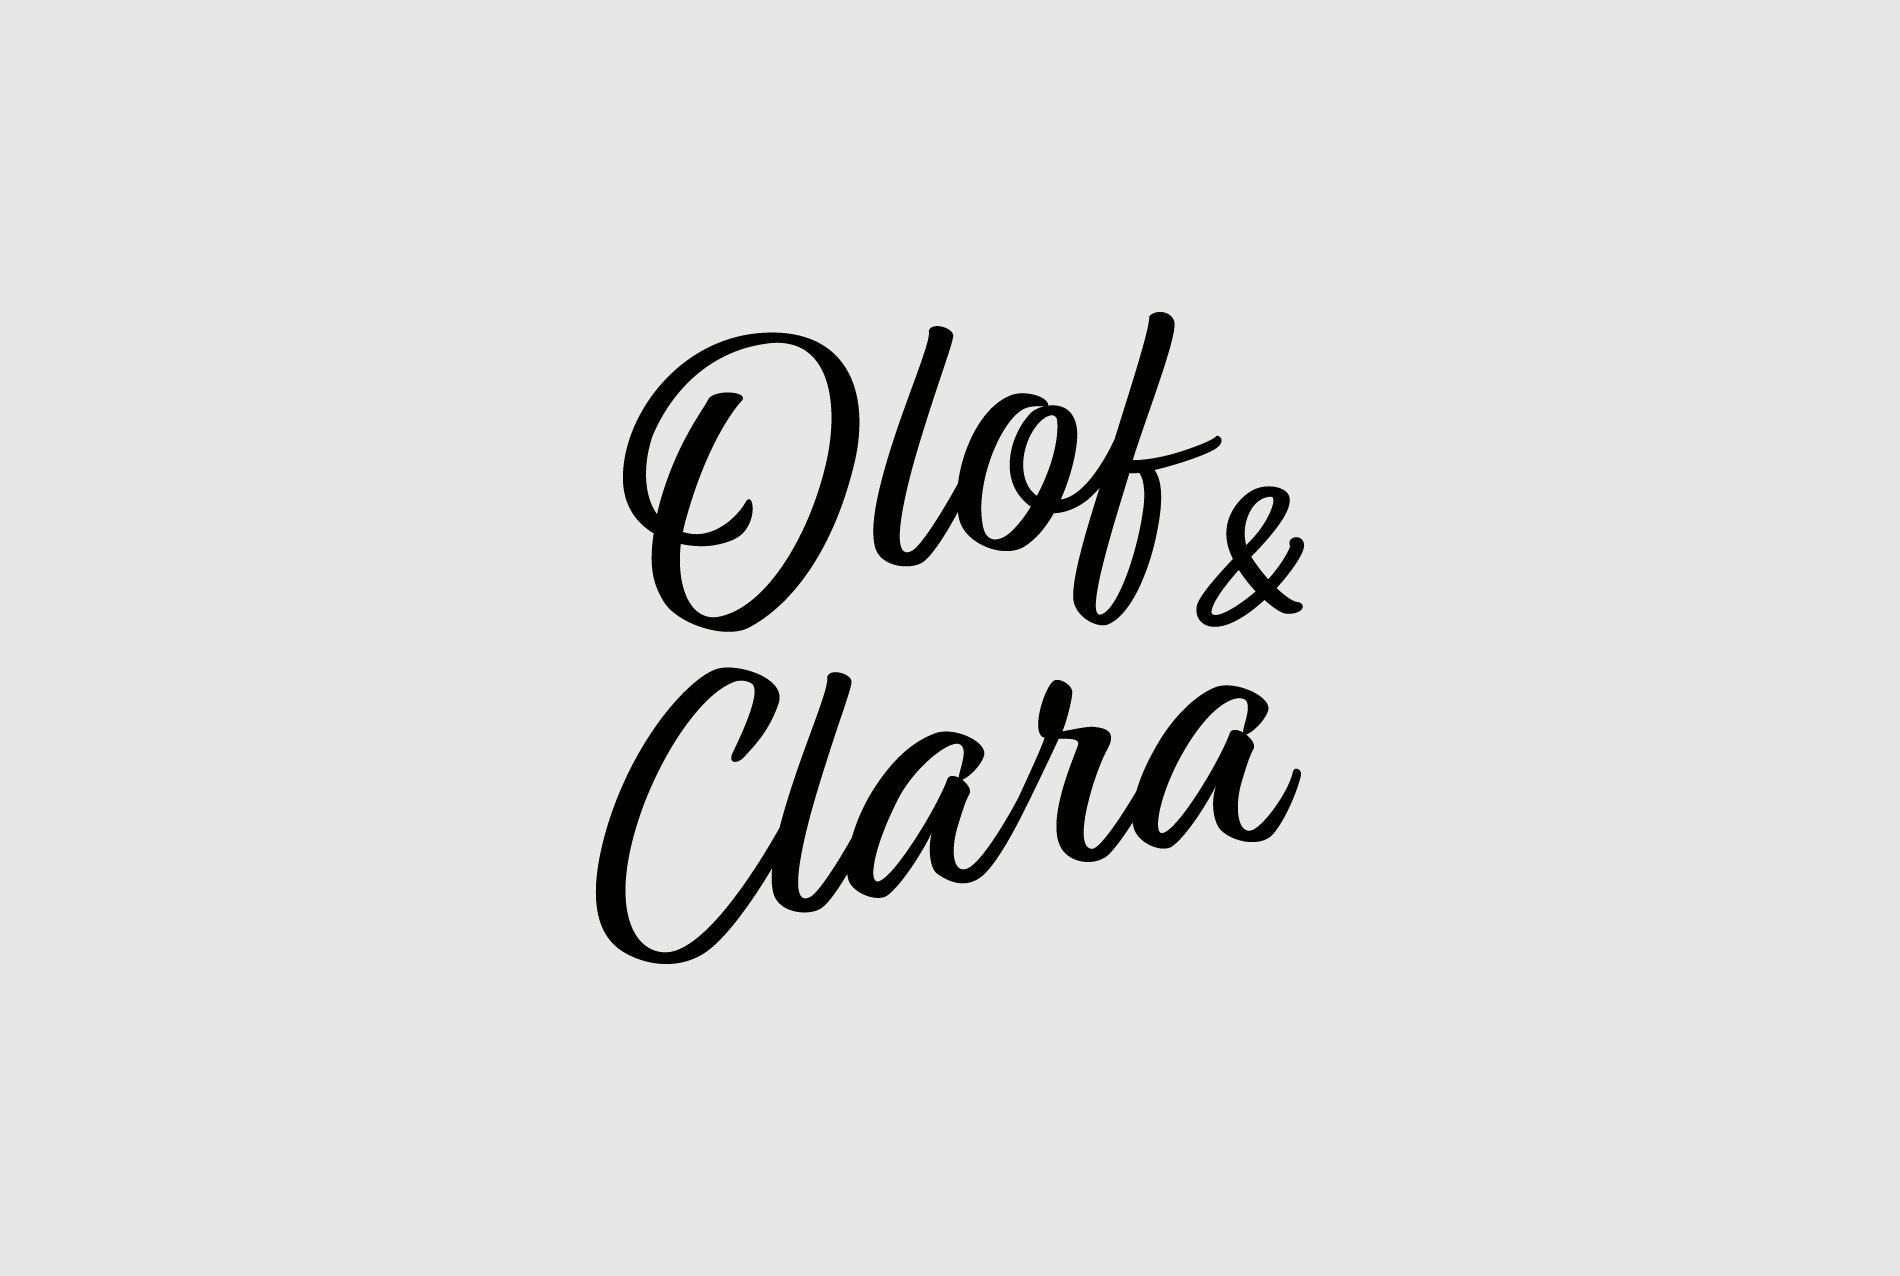 Logos_OlofClara